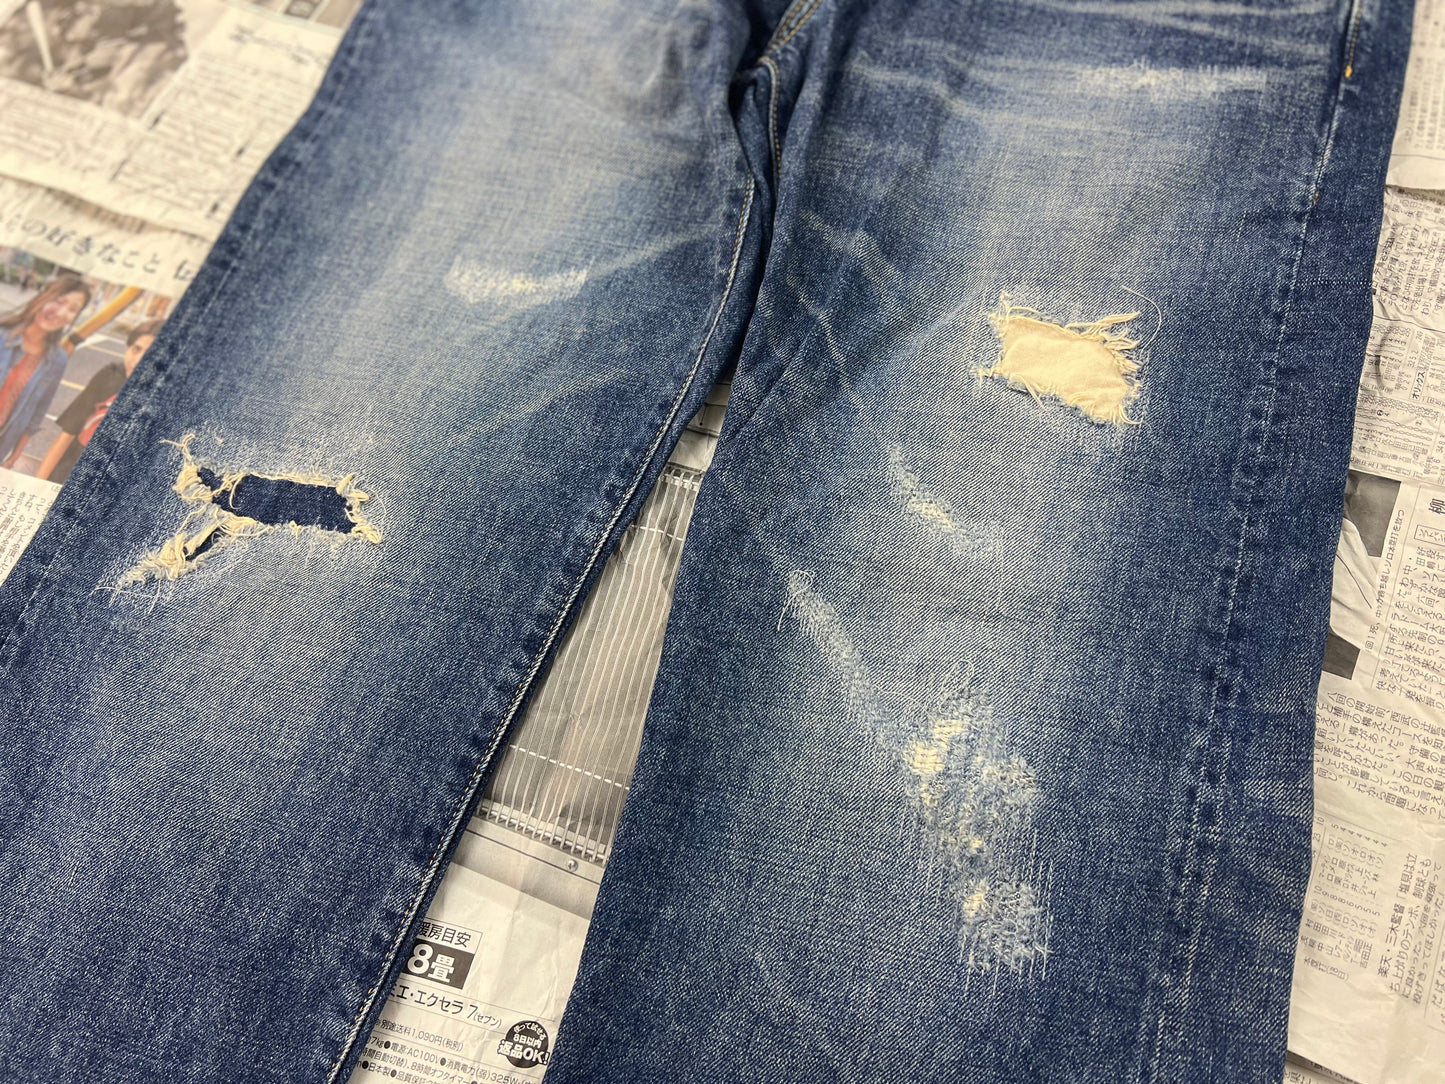 [36] Studio D'Artisan Distressed Jeans